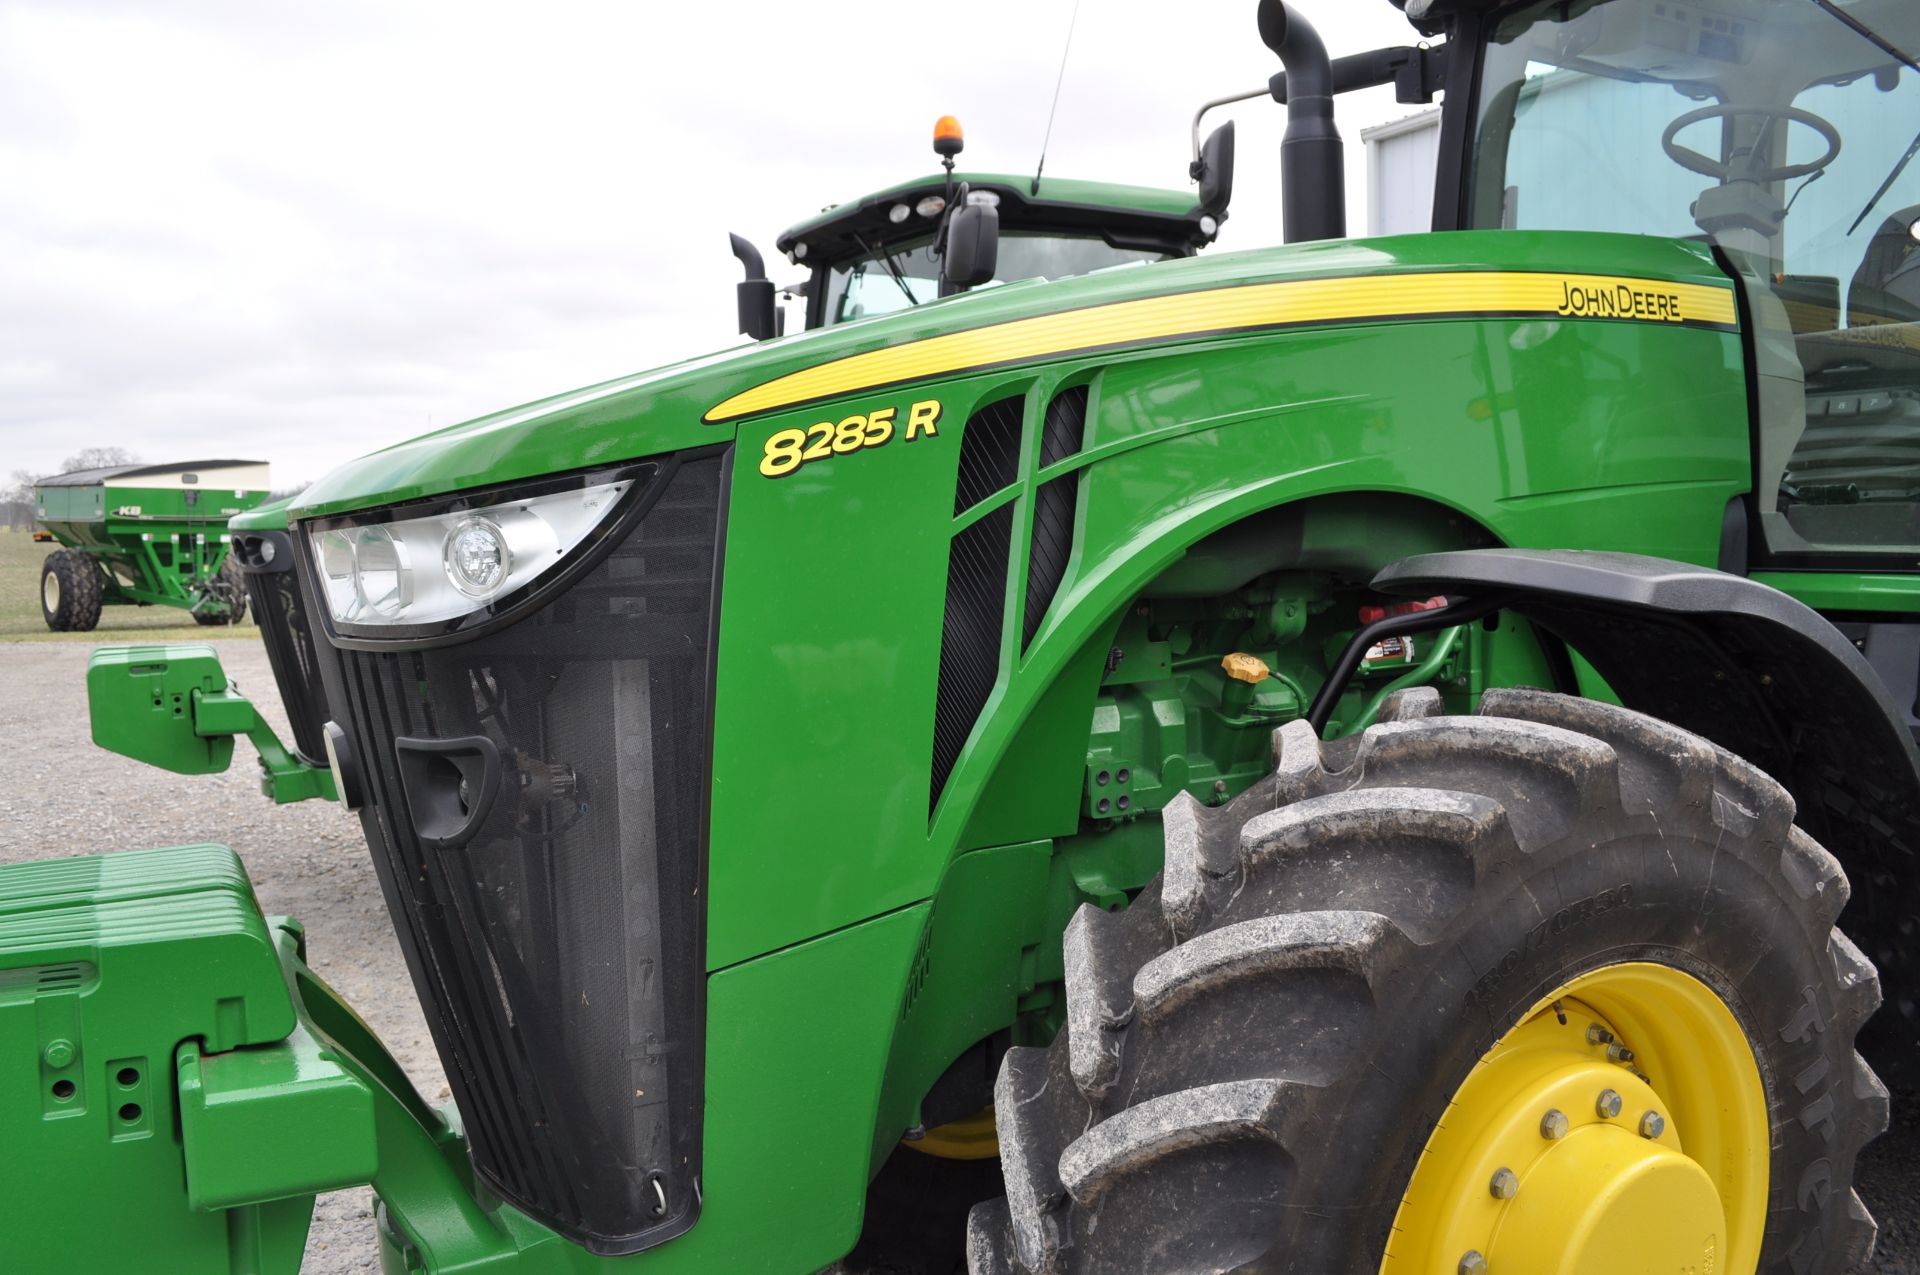 John Deere 8285R tractor, MFWD, 480/80 R 46 duals, 420 / 90 R 30 front, fenders, powershift - Image 16 of 31